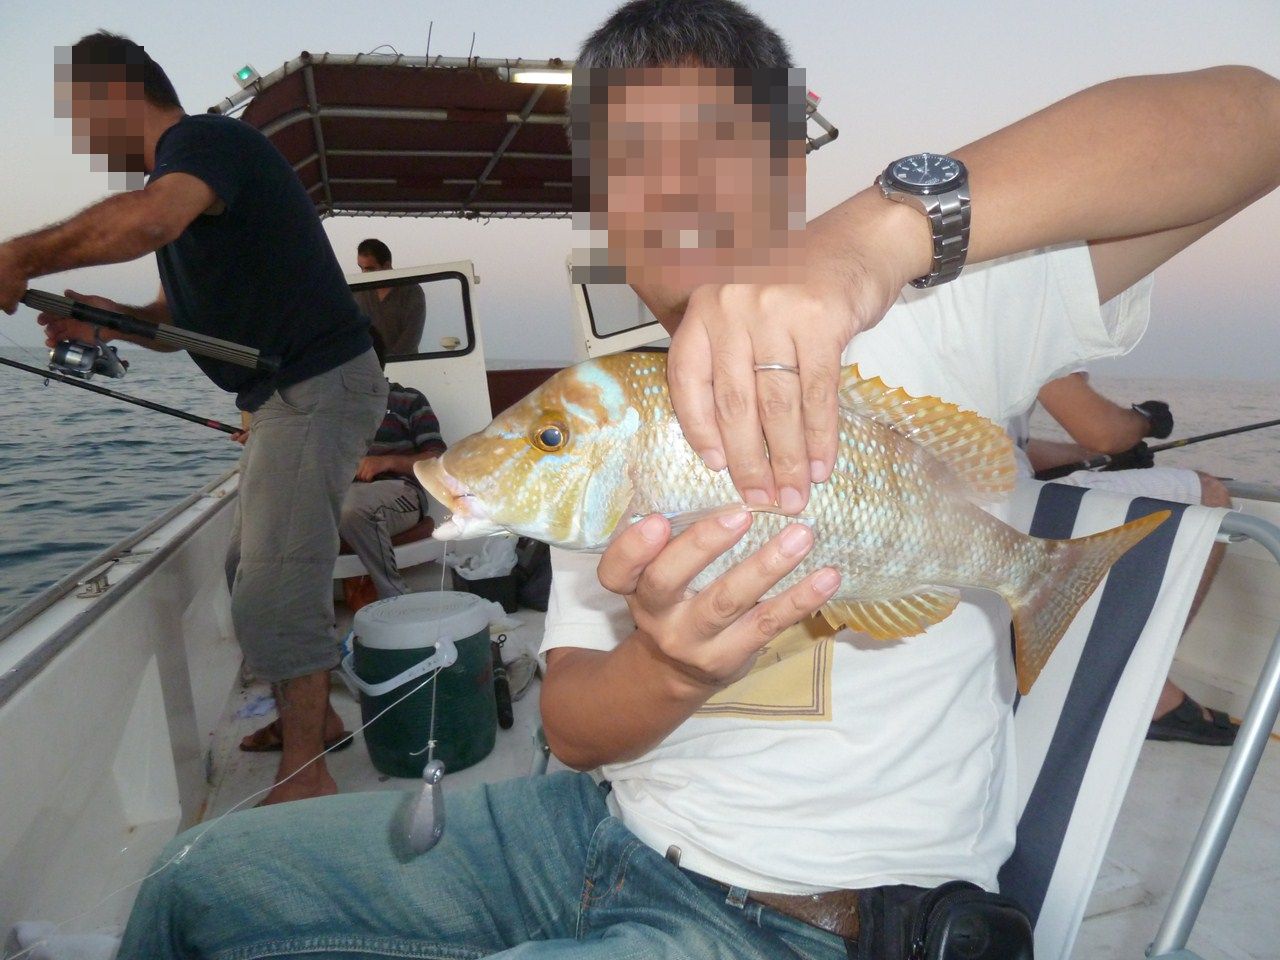 http://www.shintoko.jp/engblog/archives/images/2011/10/111028_qatarfishing936.jpg